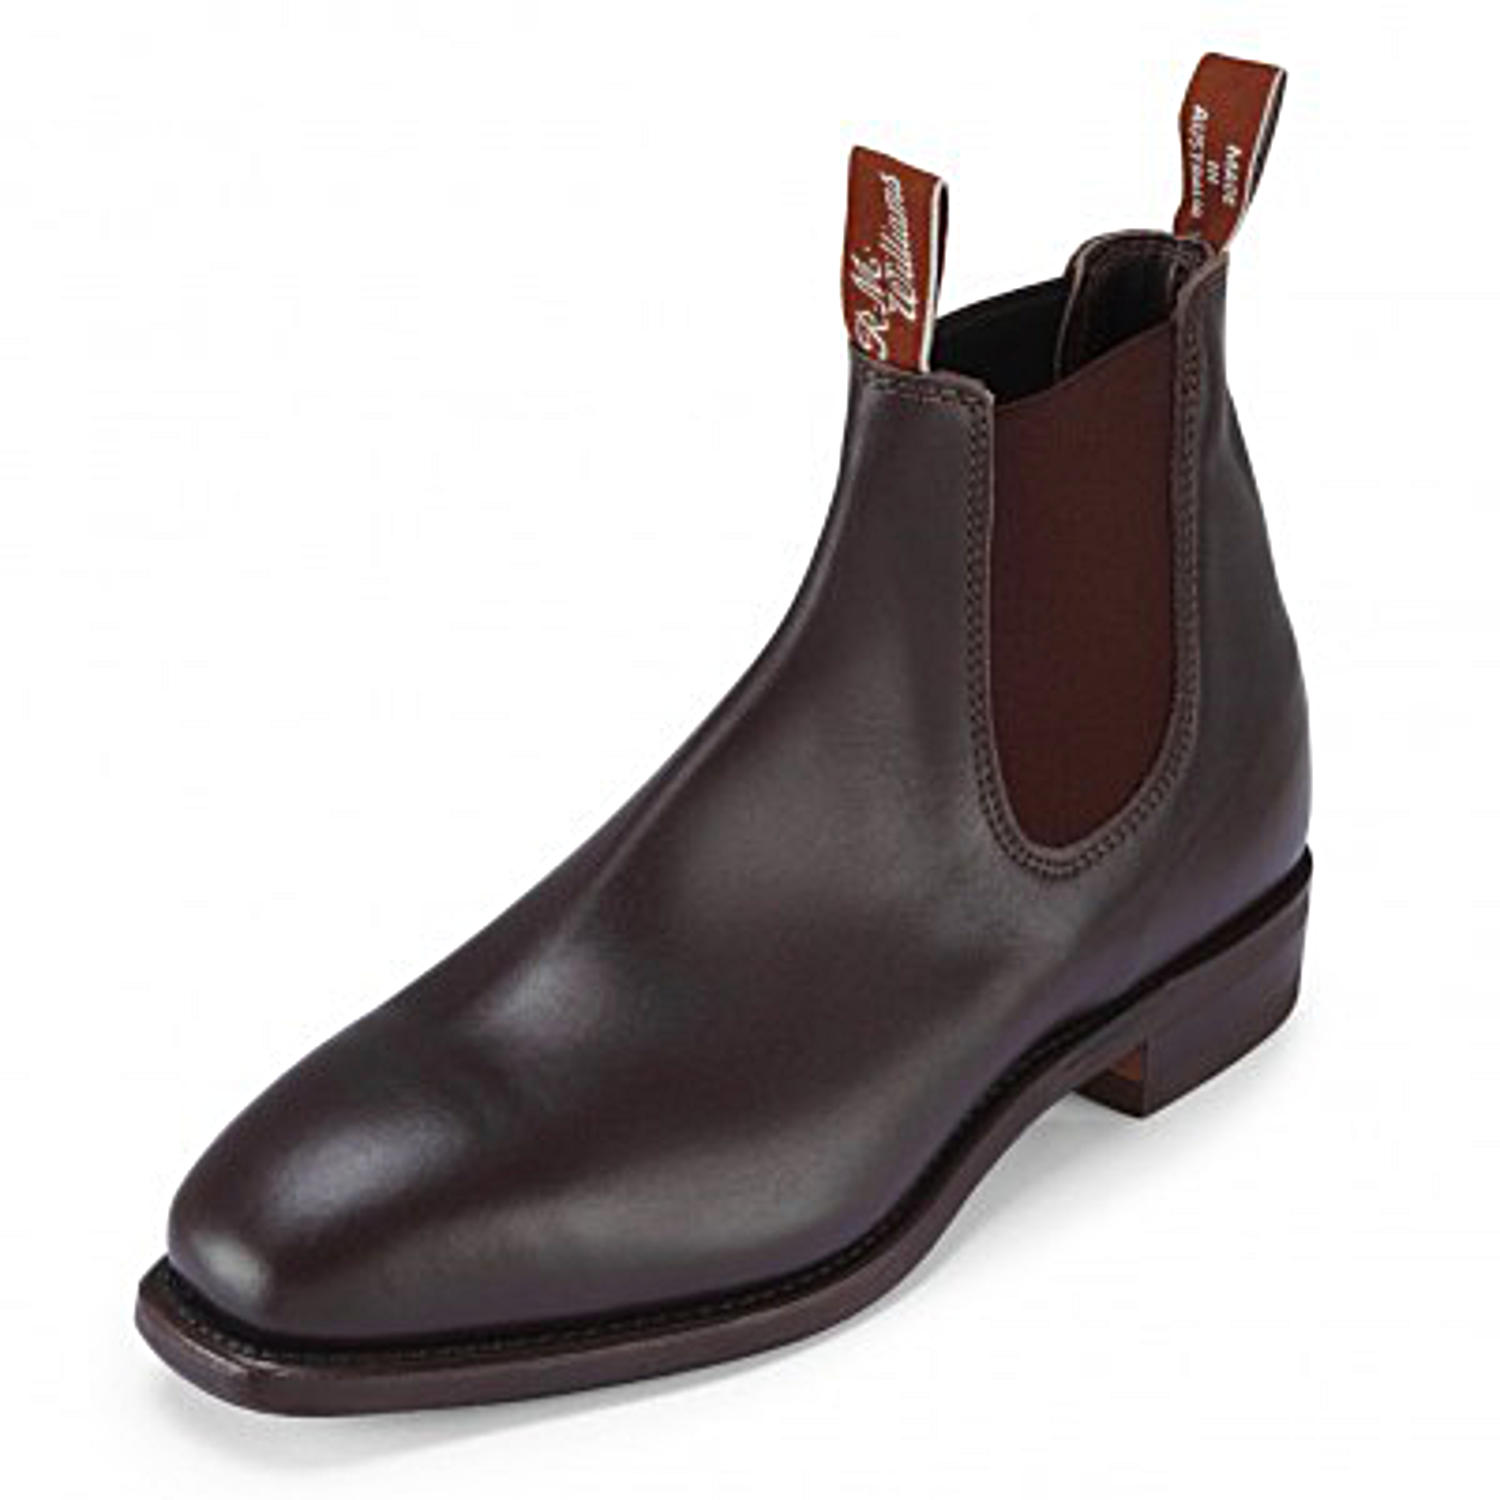 RM Williams Comfort Craftsman - Pediwear Footwear